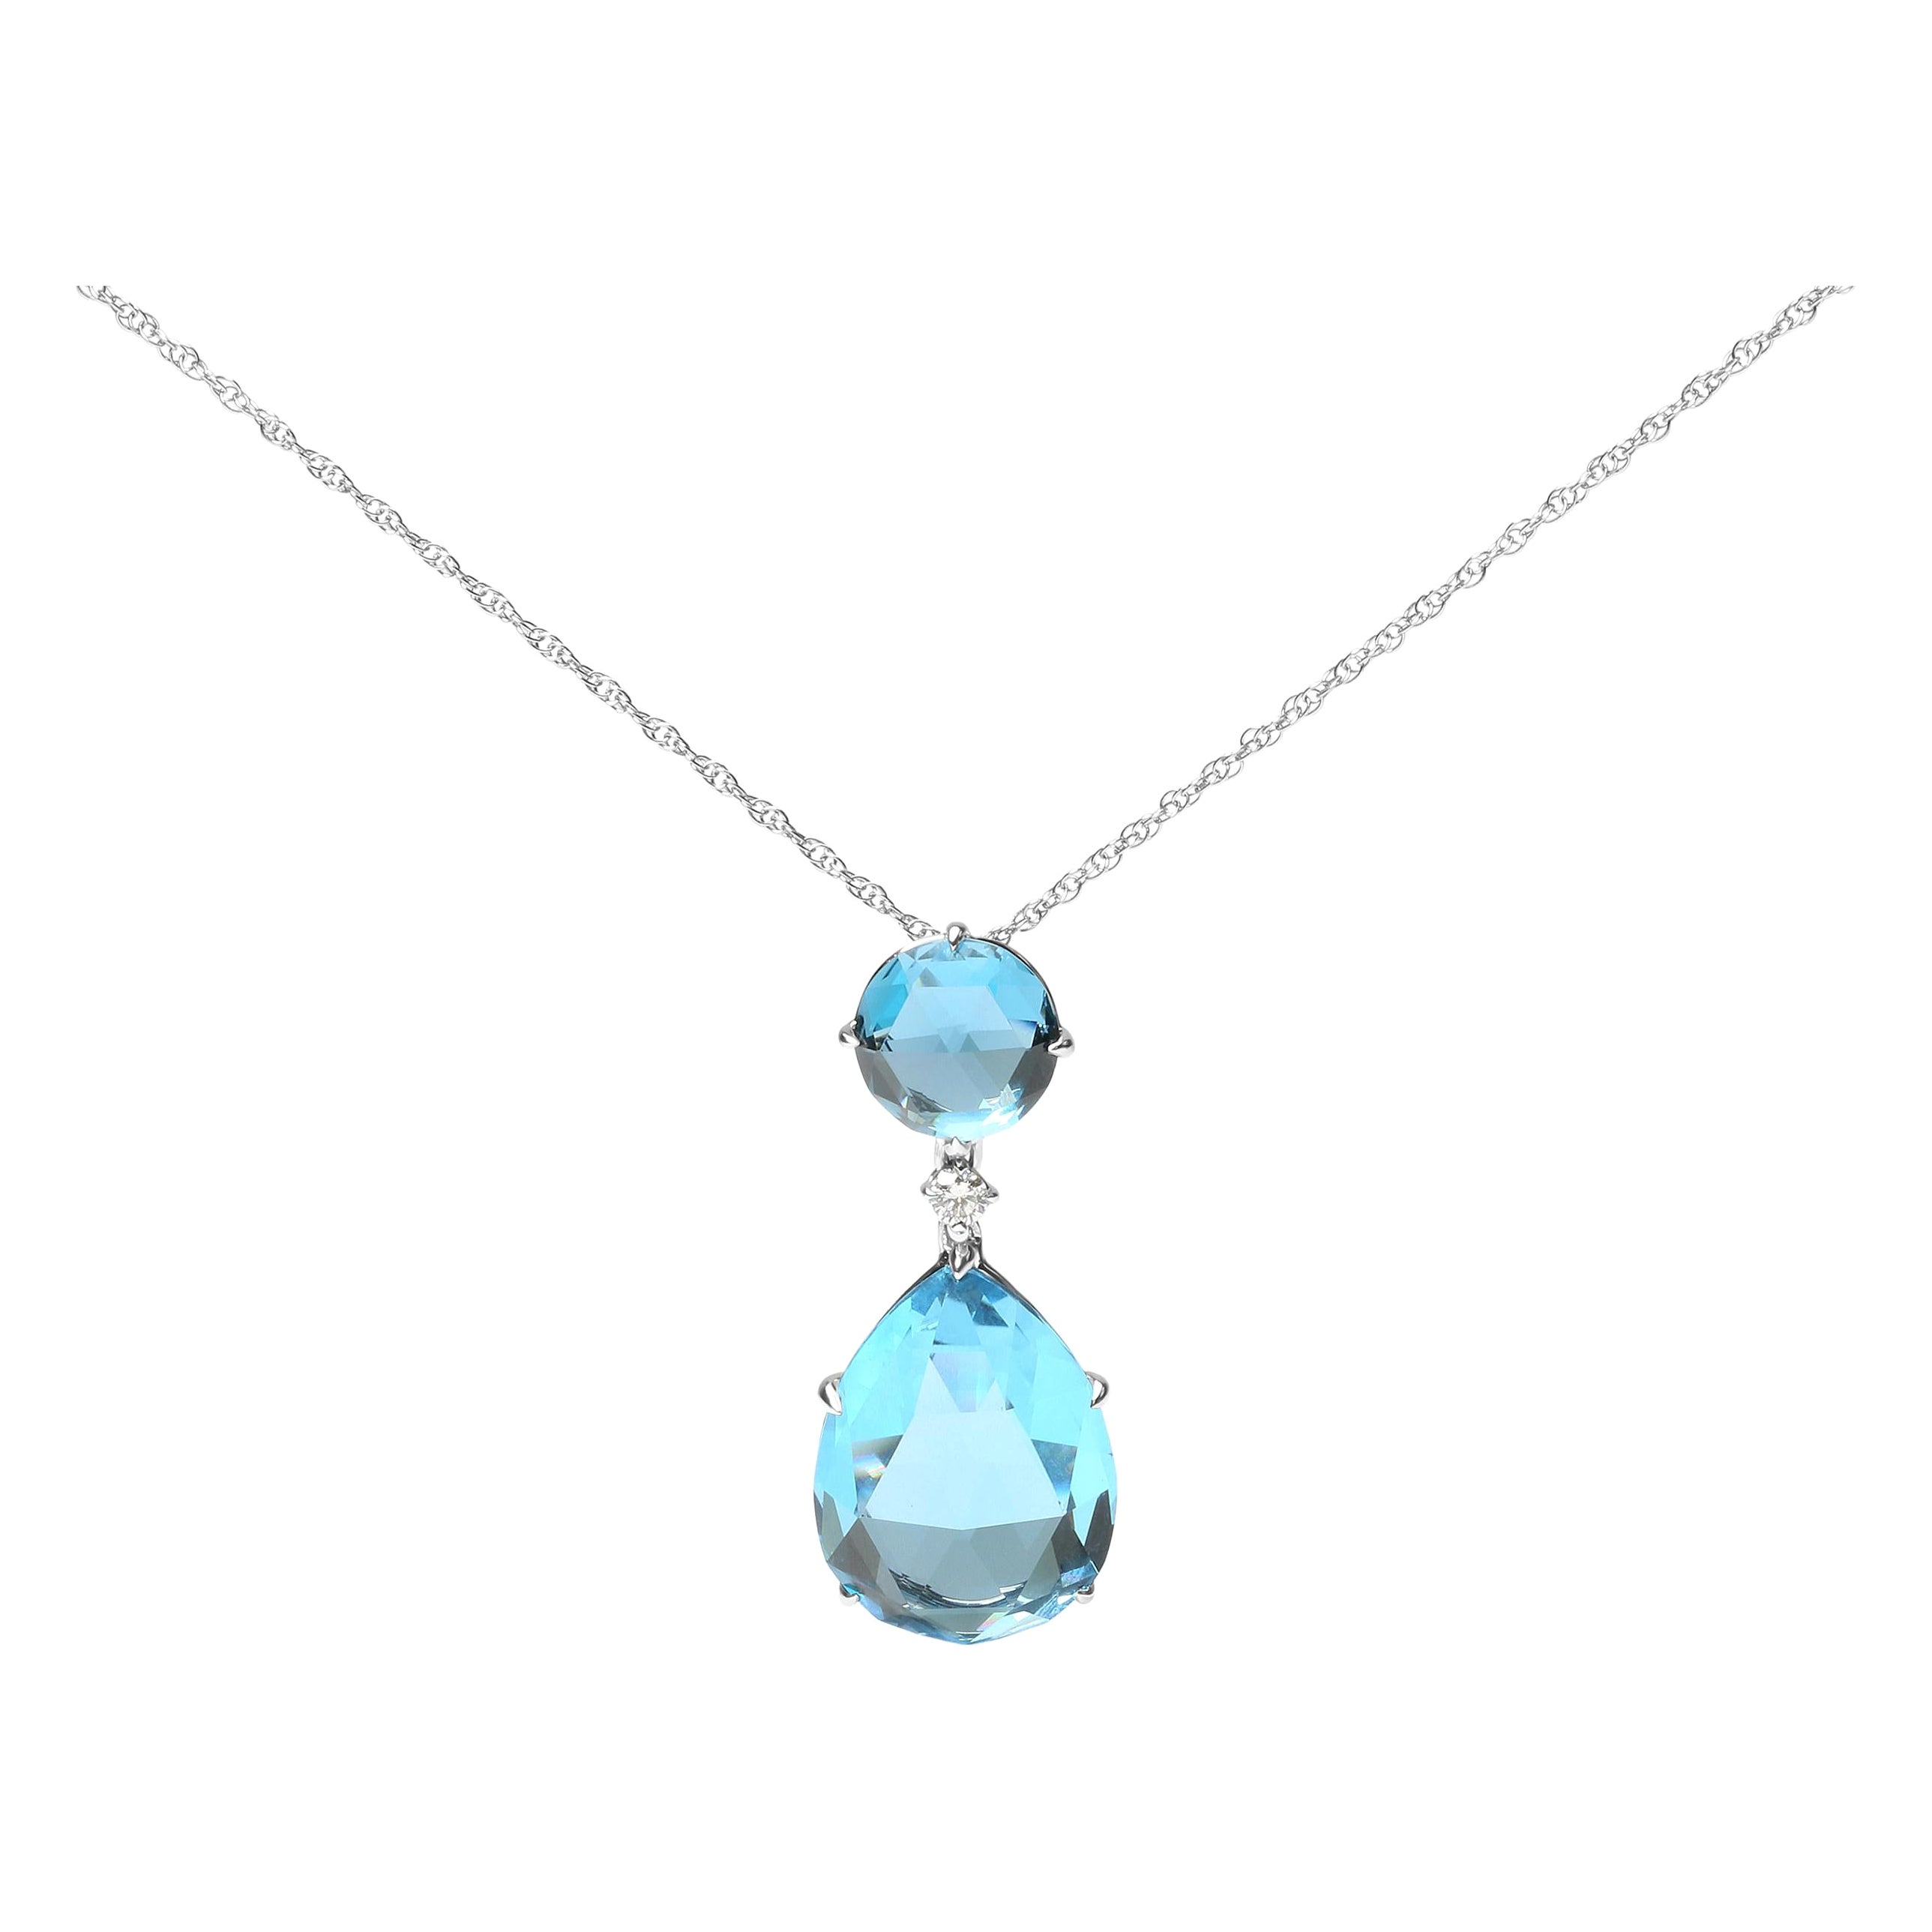 18K White Gold Diamond Accent & Blue Topaz & Sky Blue Topaz Pendant Necklace